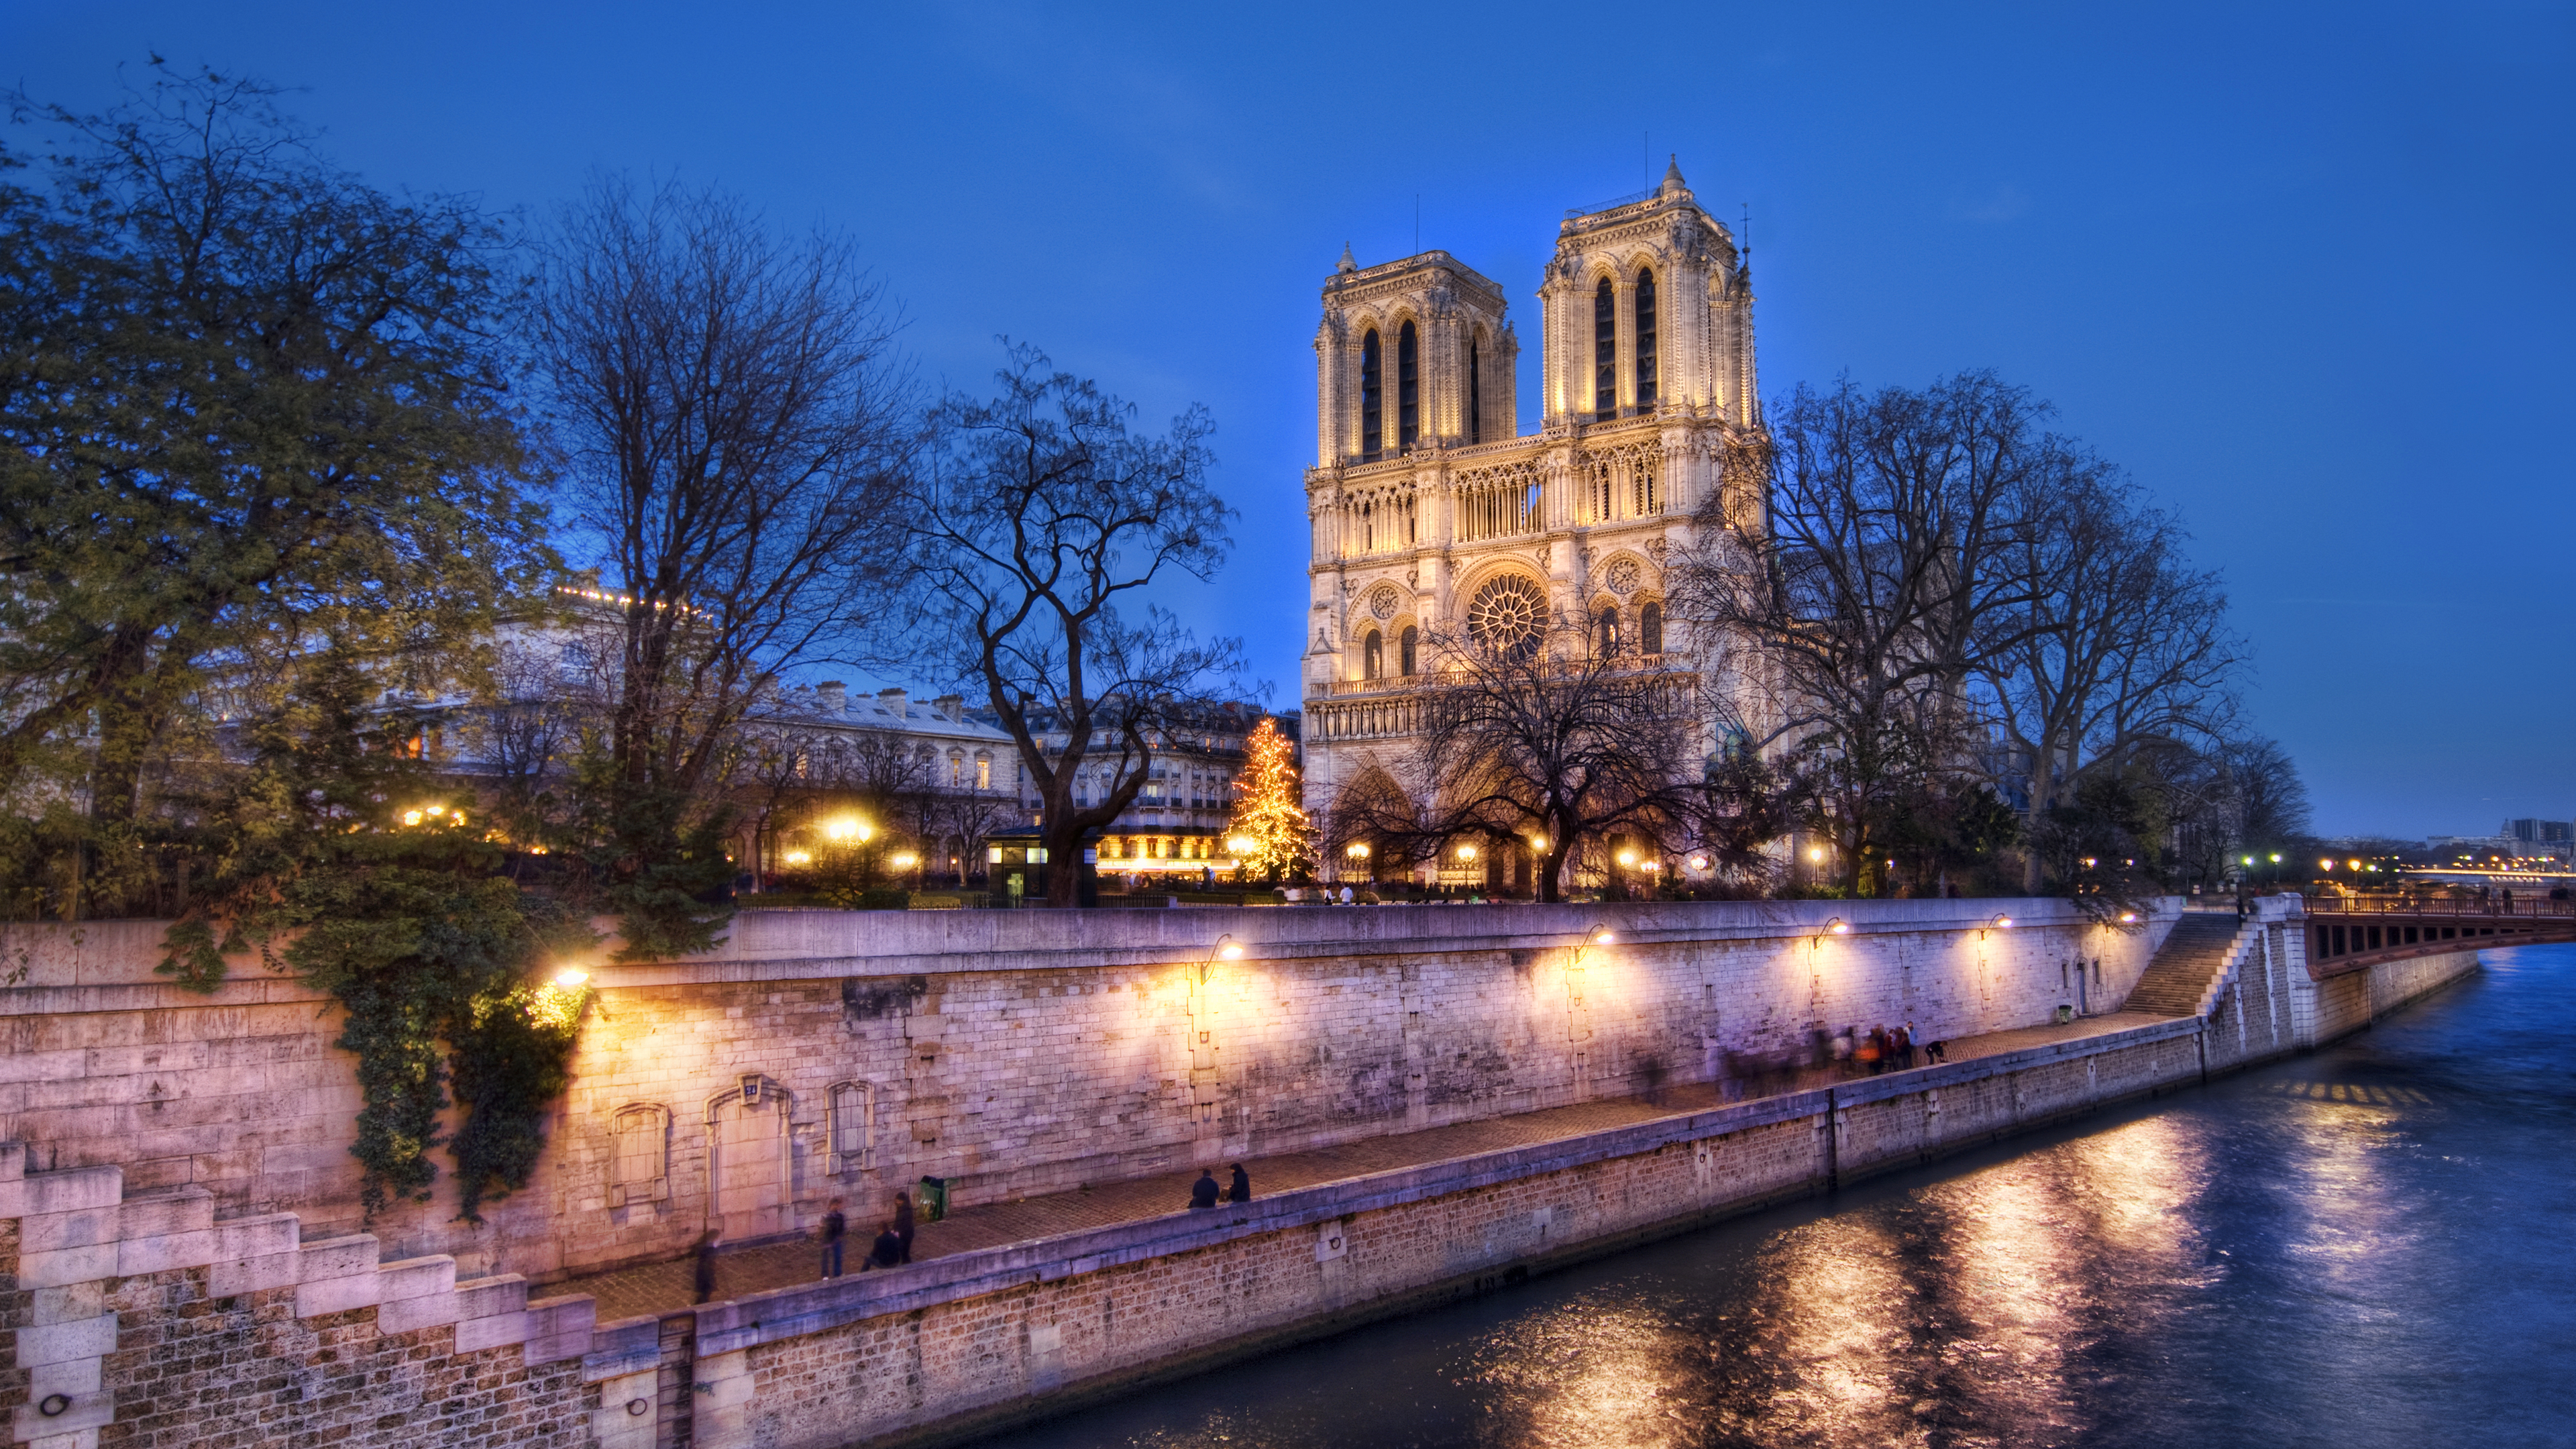 General 3840x2160 Trey Ratcliff photography 4K France building water trees lights city lights sky Notre-Dame Paris